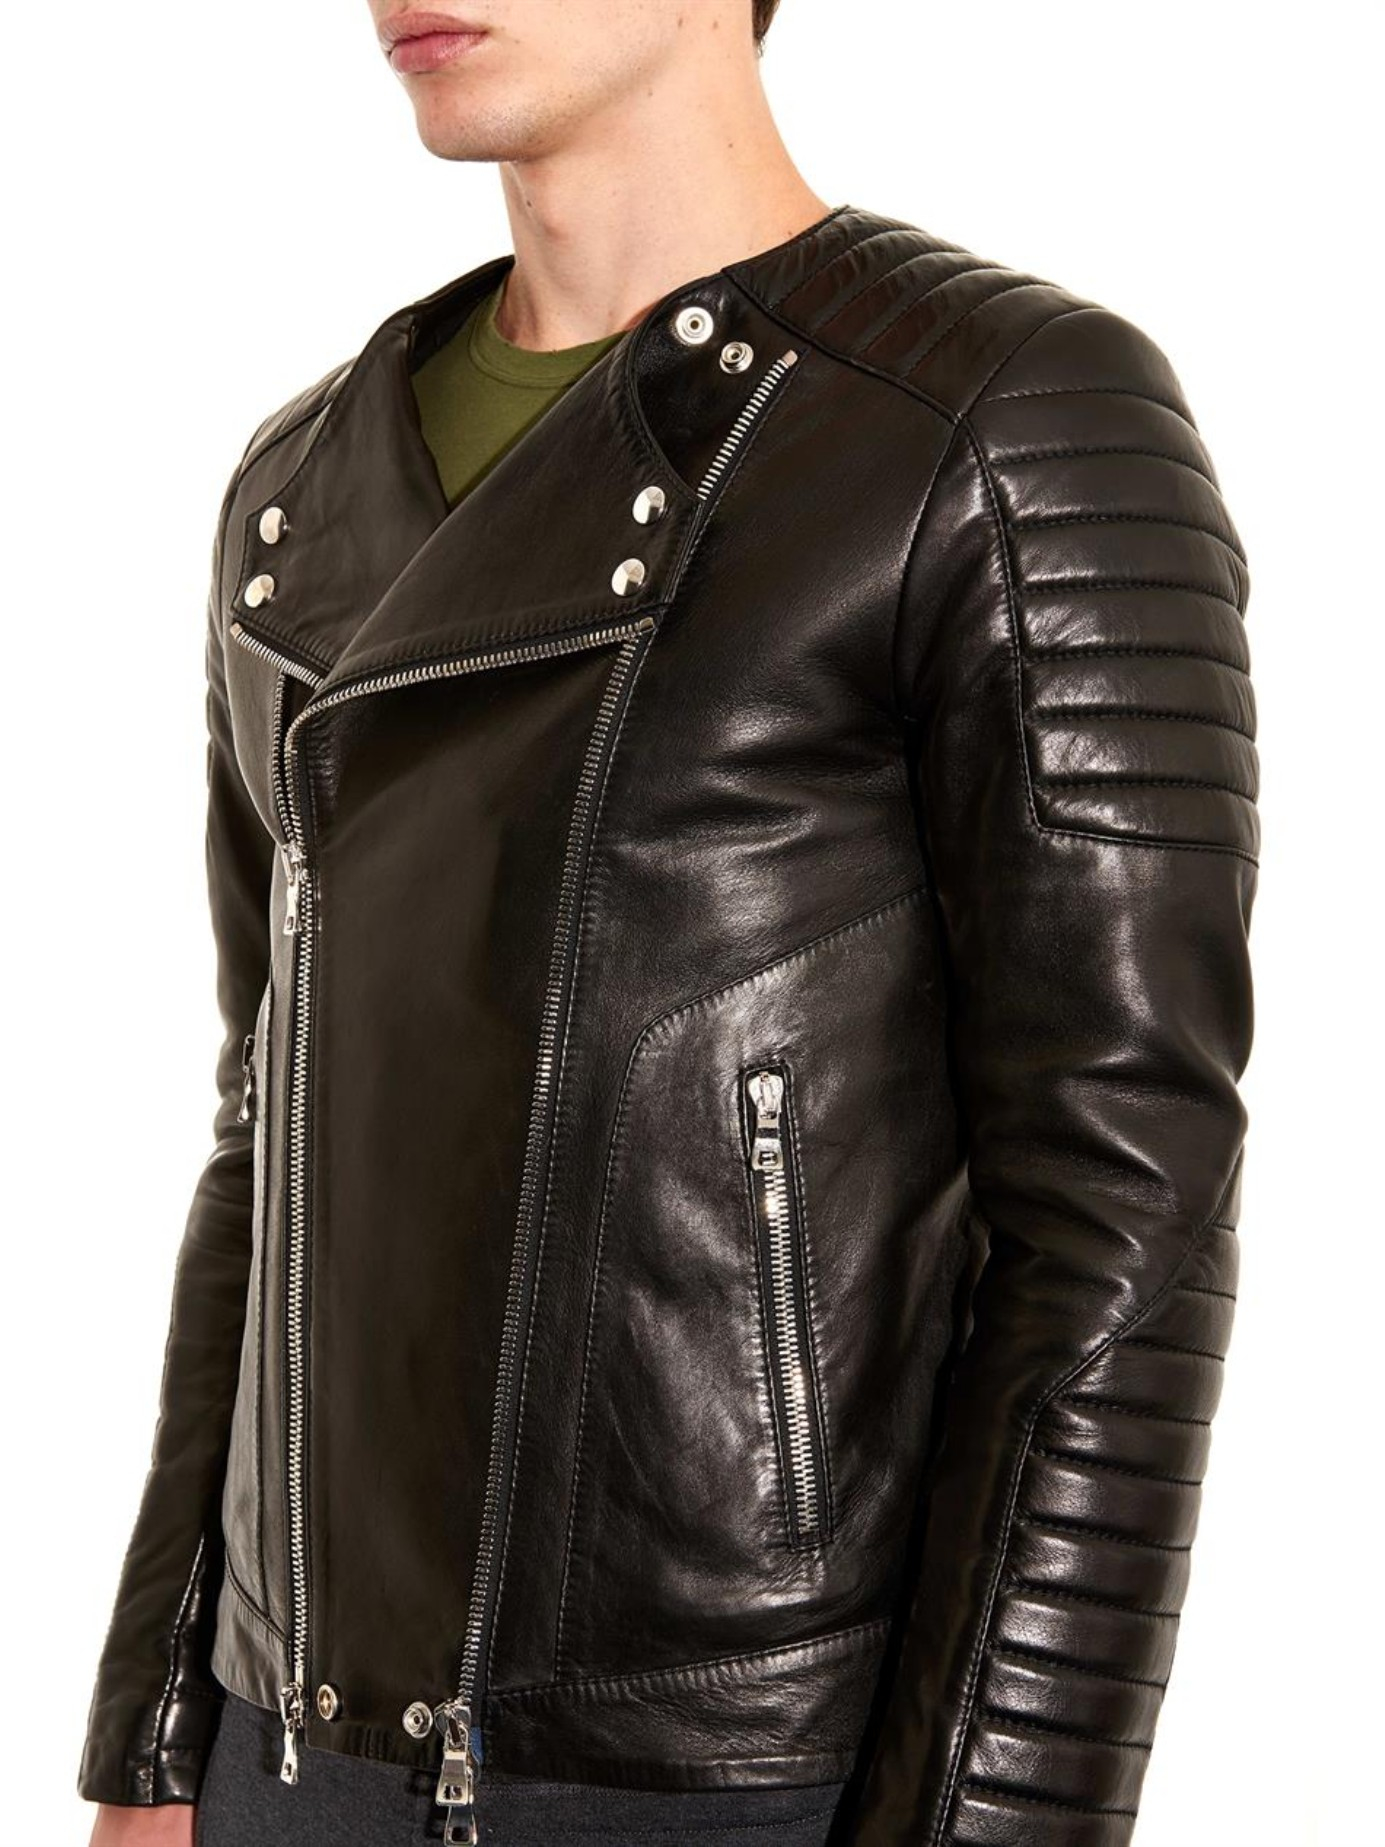 Balmain Classic Leather Biker Jacket in Black for Men - Lyst